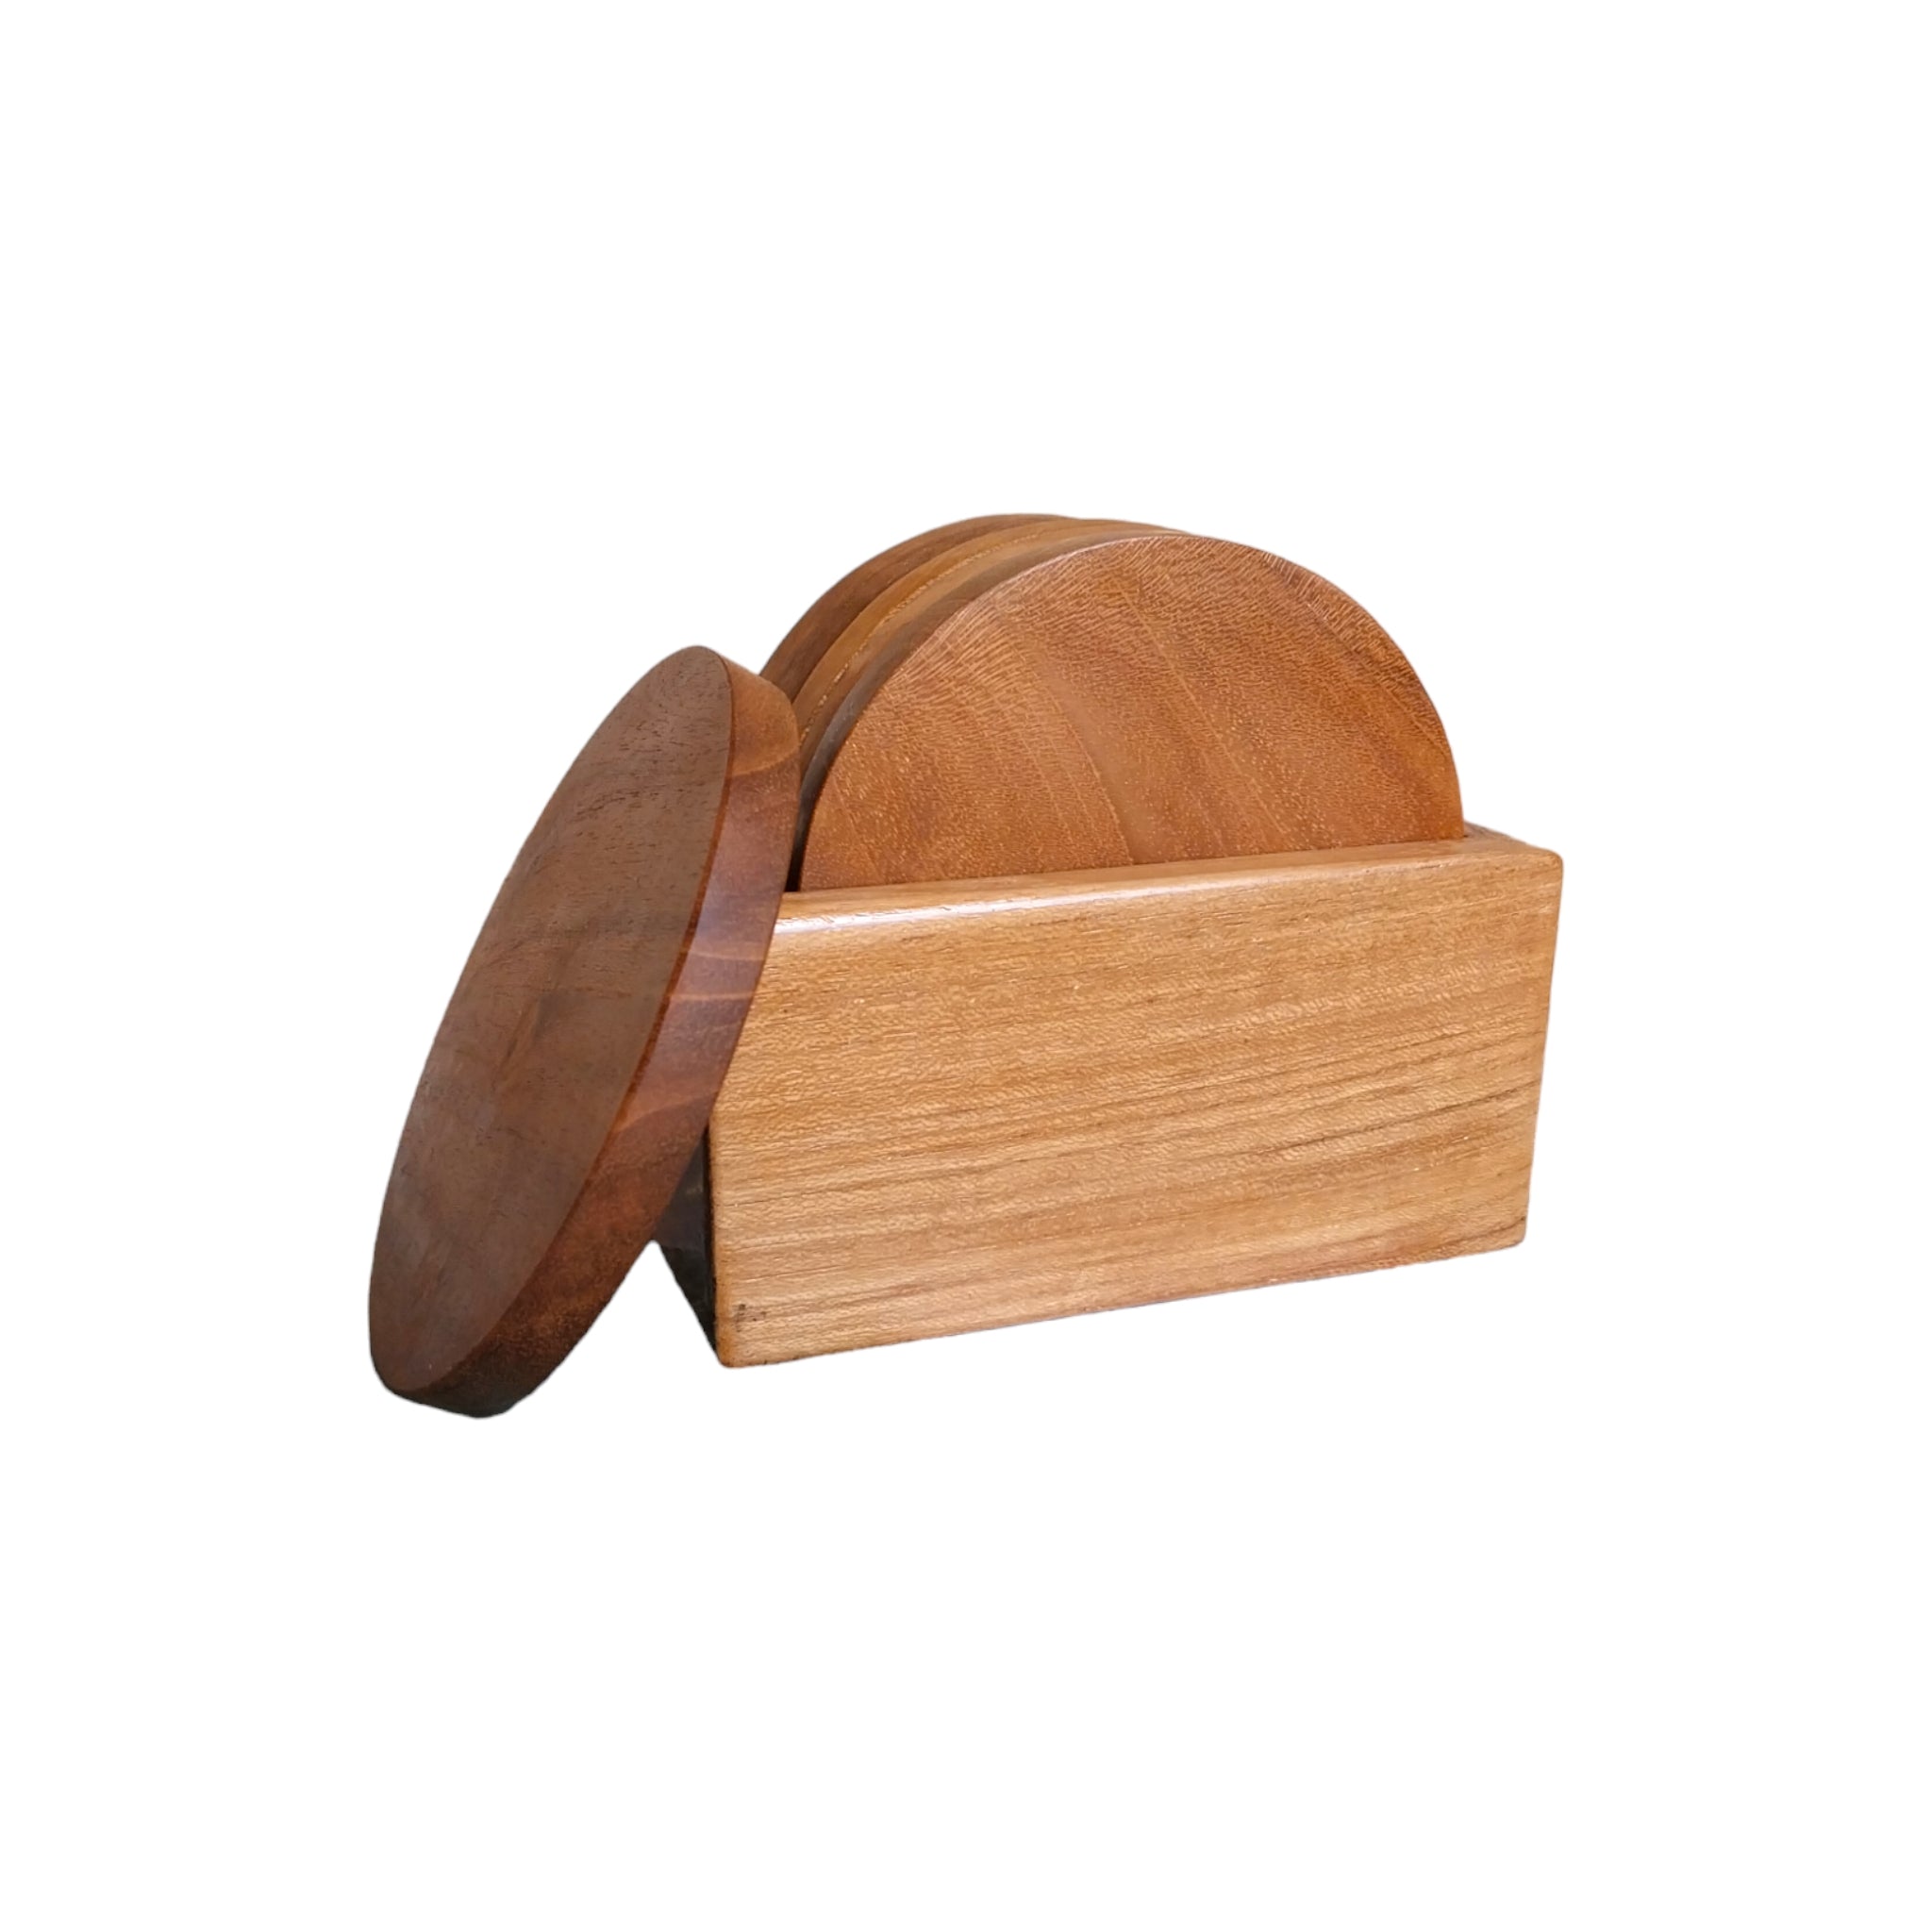 Wooden Brown Coaster, Set of 6 includes holder